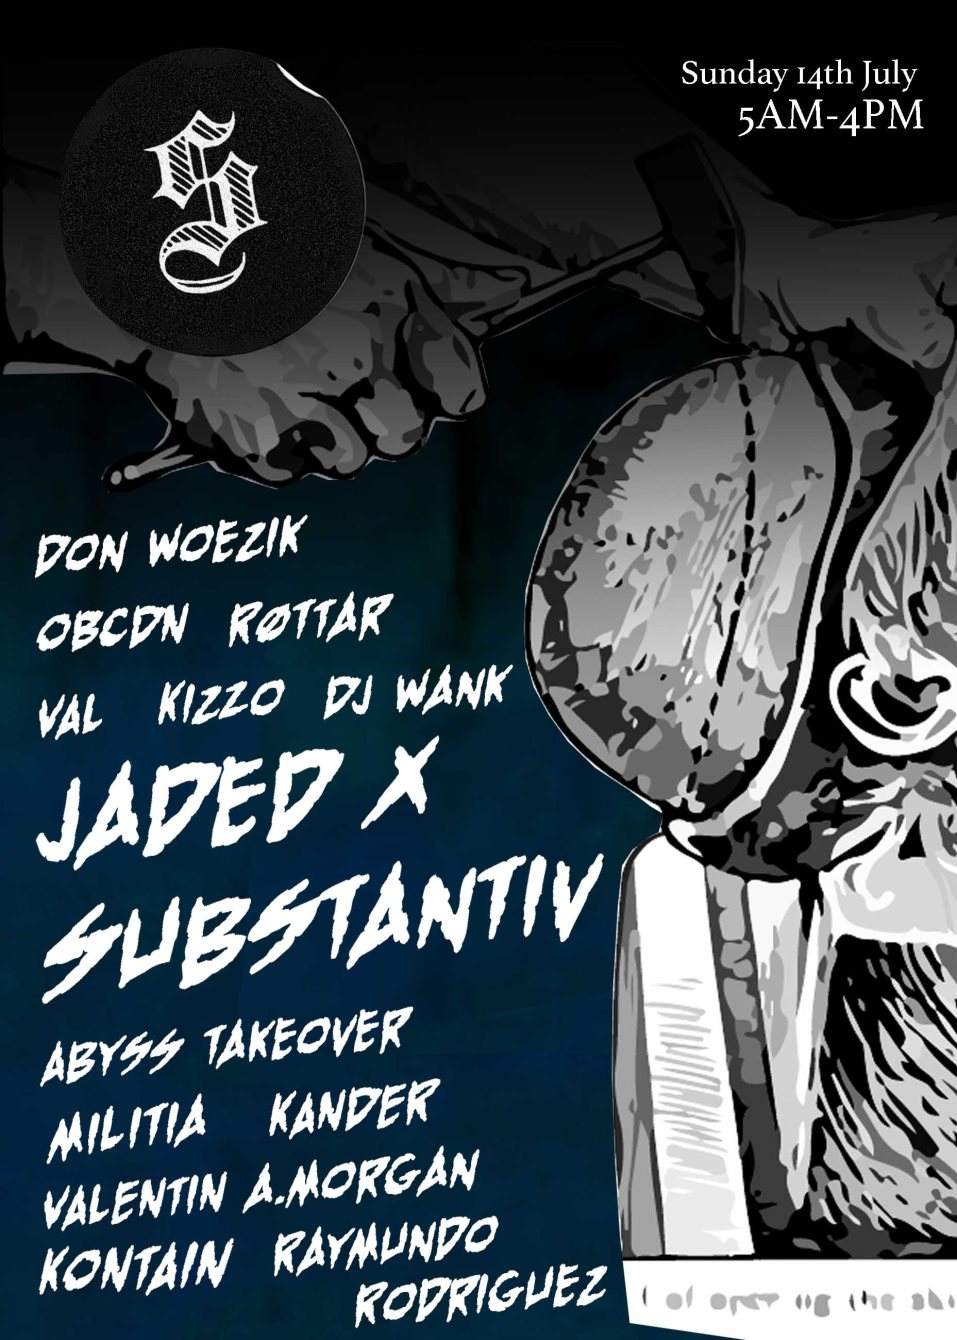 Jaded x Substantiv: OBCDN, Røttar, Don Woezik, DJ Wank, Val, Kizzo - フライヤー裏